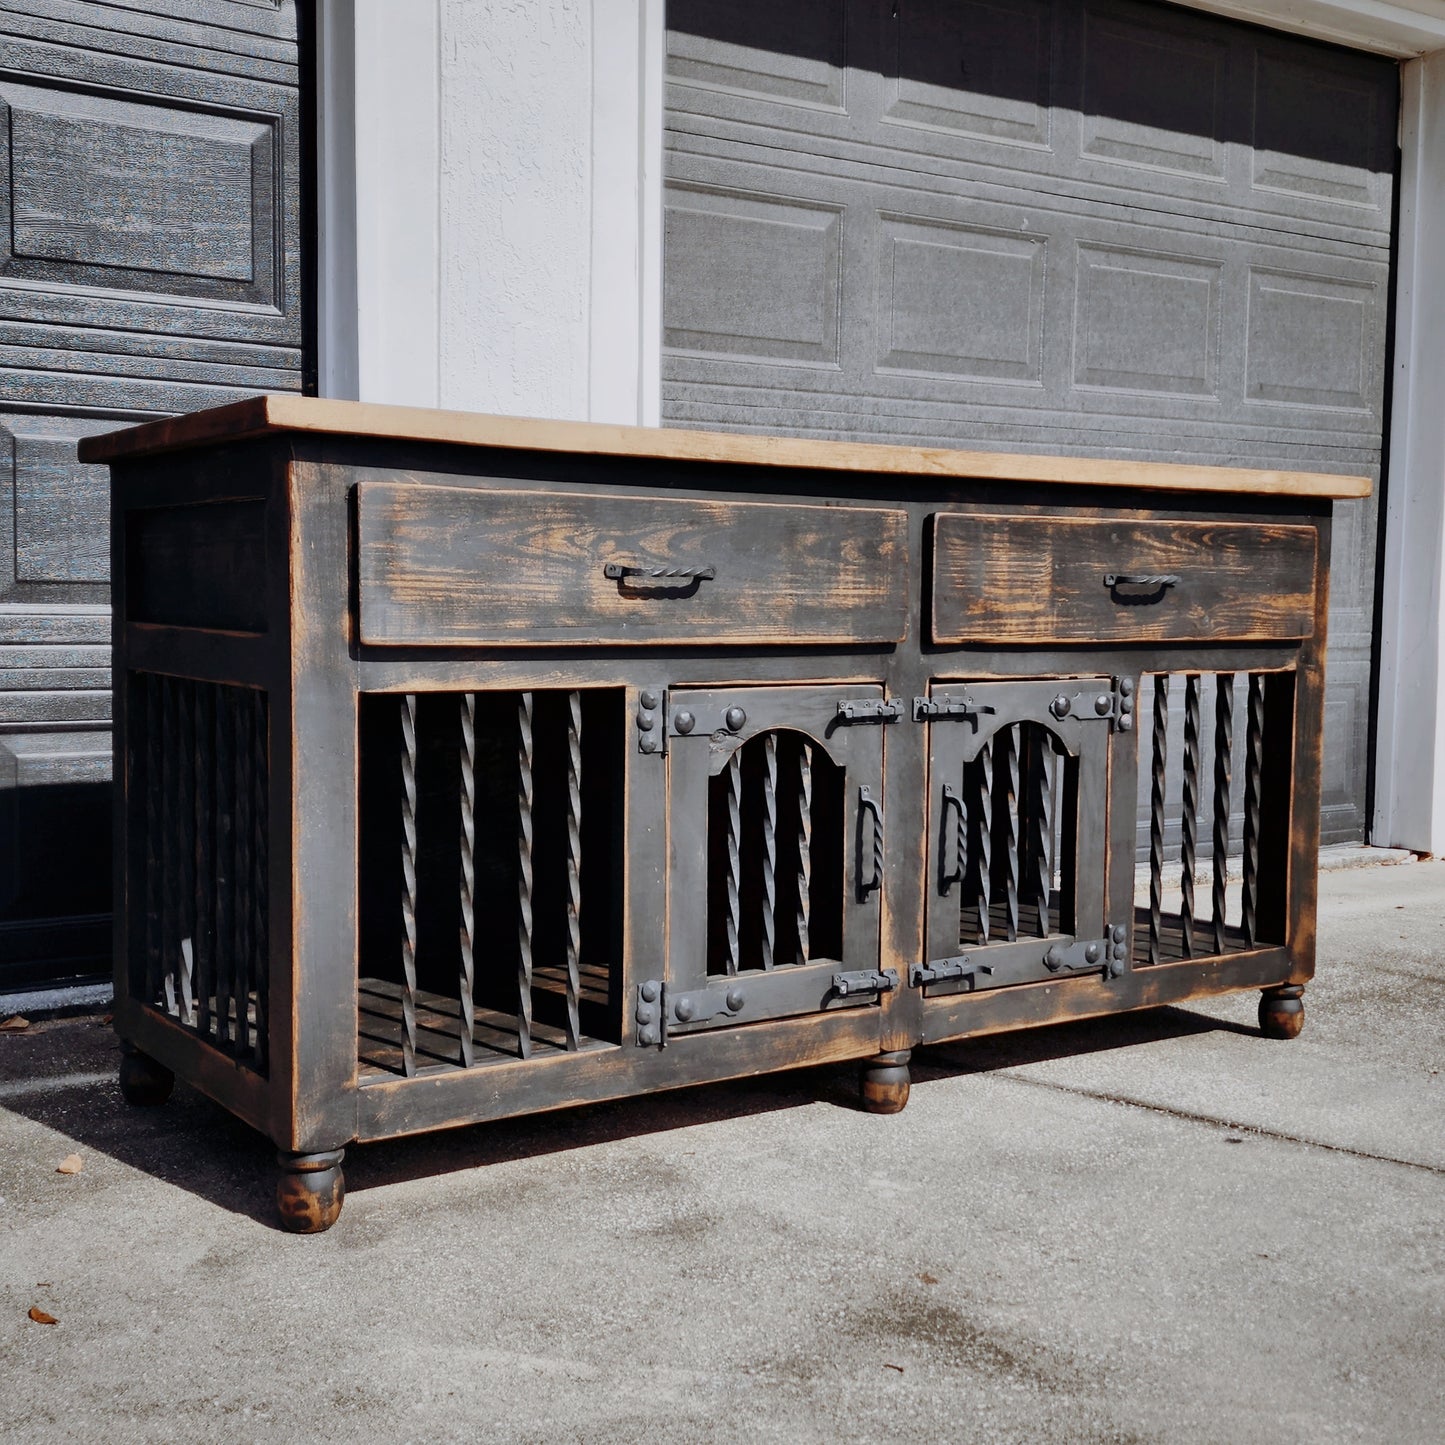 Best Seller Dog crate furniture - Rustic cottage collection - Distressed Black